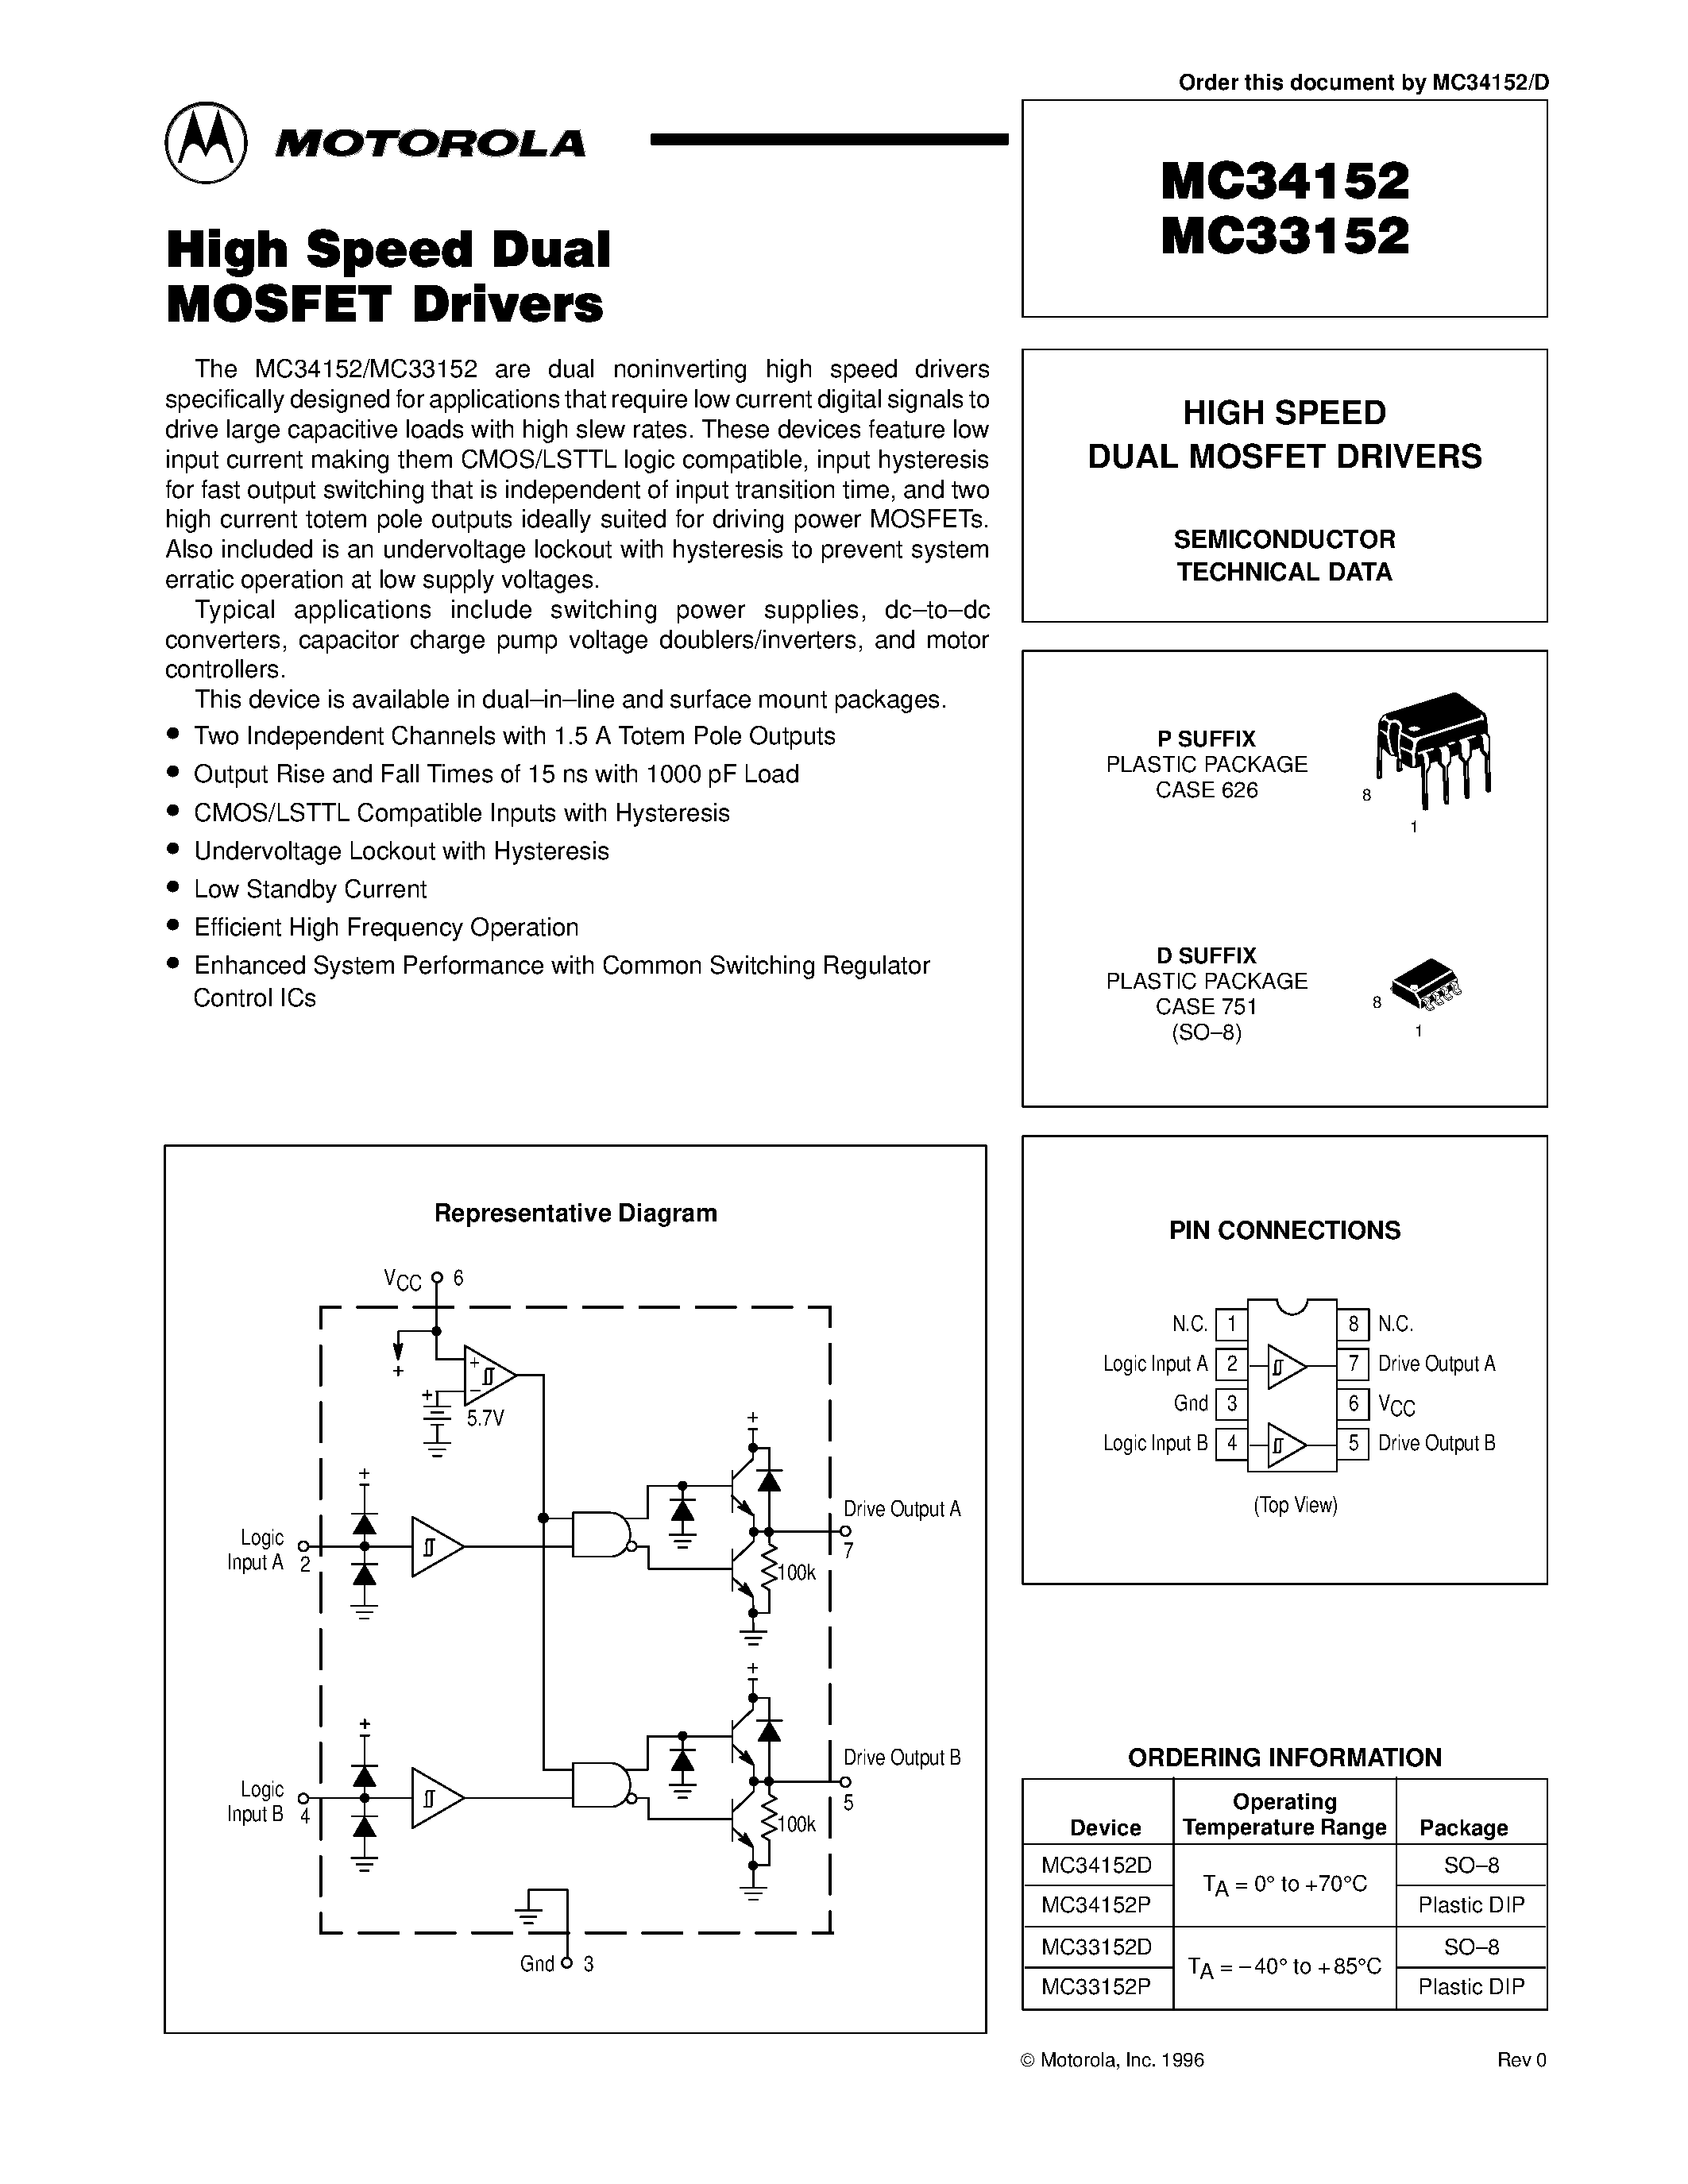 Datasheet MC33152 - (MC34152 / MC33152) HIGH SPEED DUAL MOSFET DRIVERS page 1